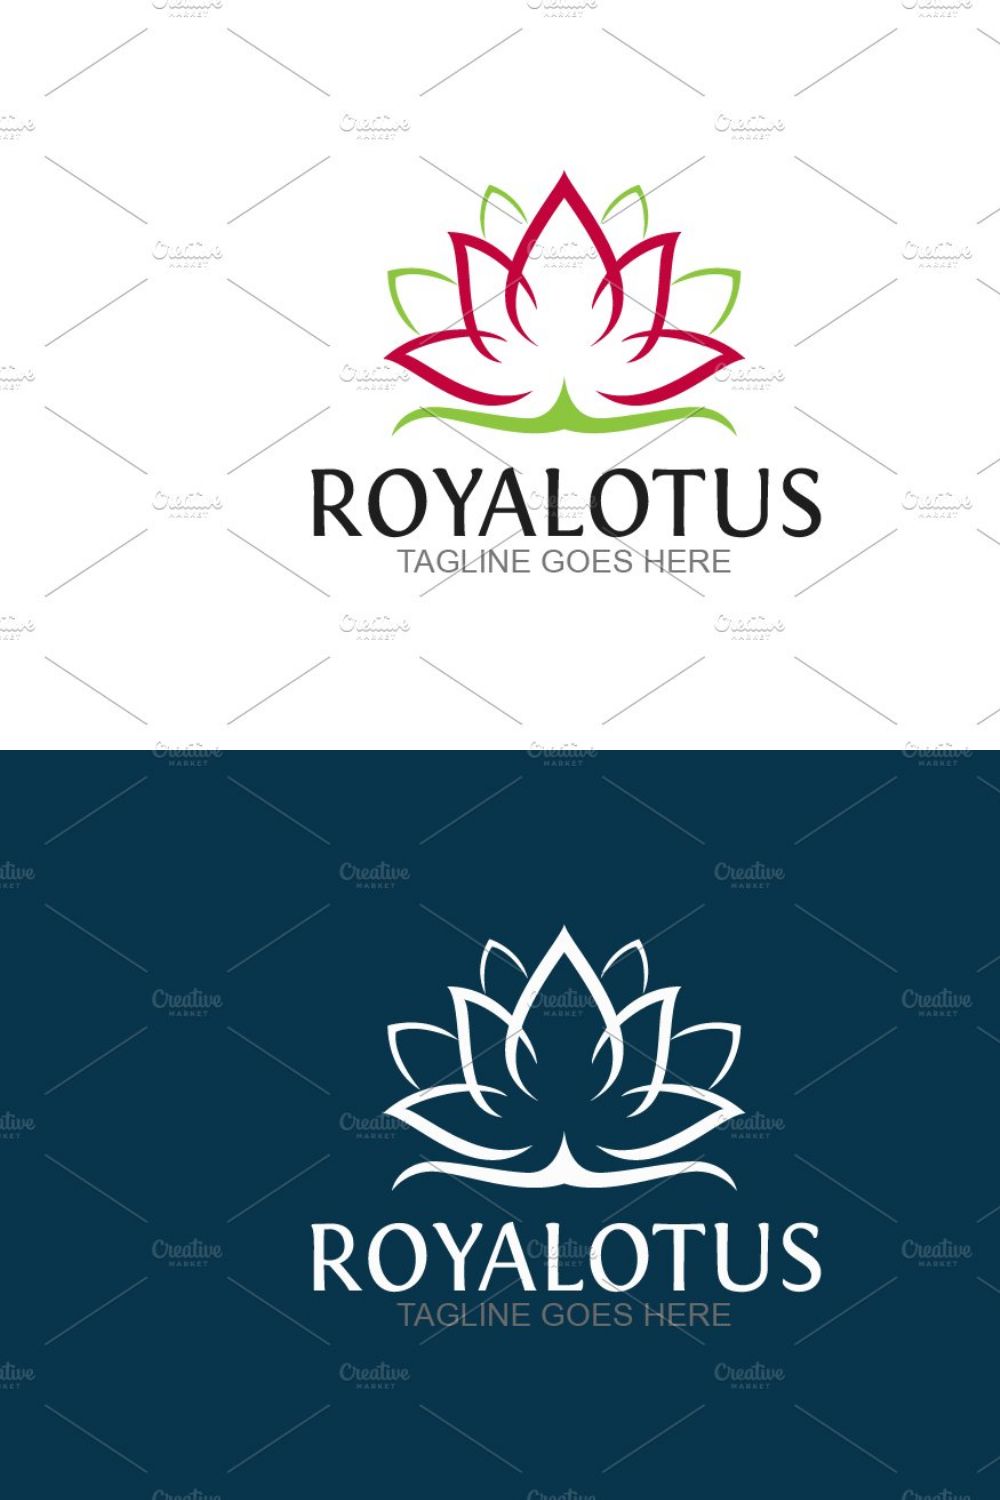 Royal Lotus pinterest preview image.